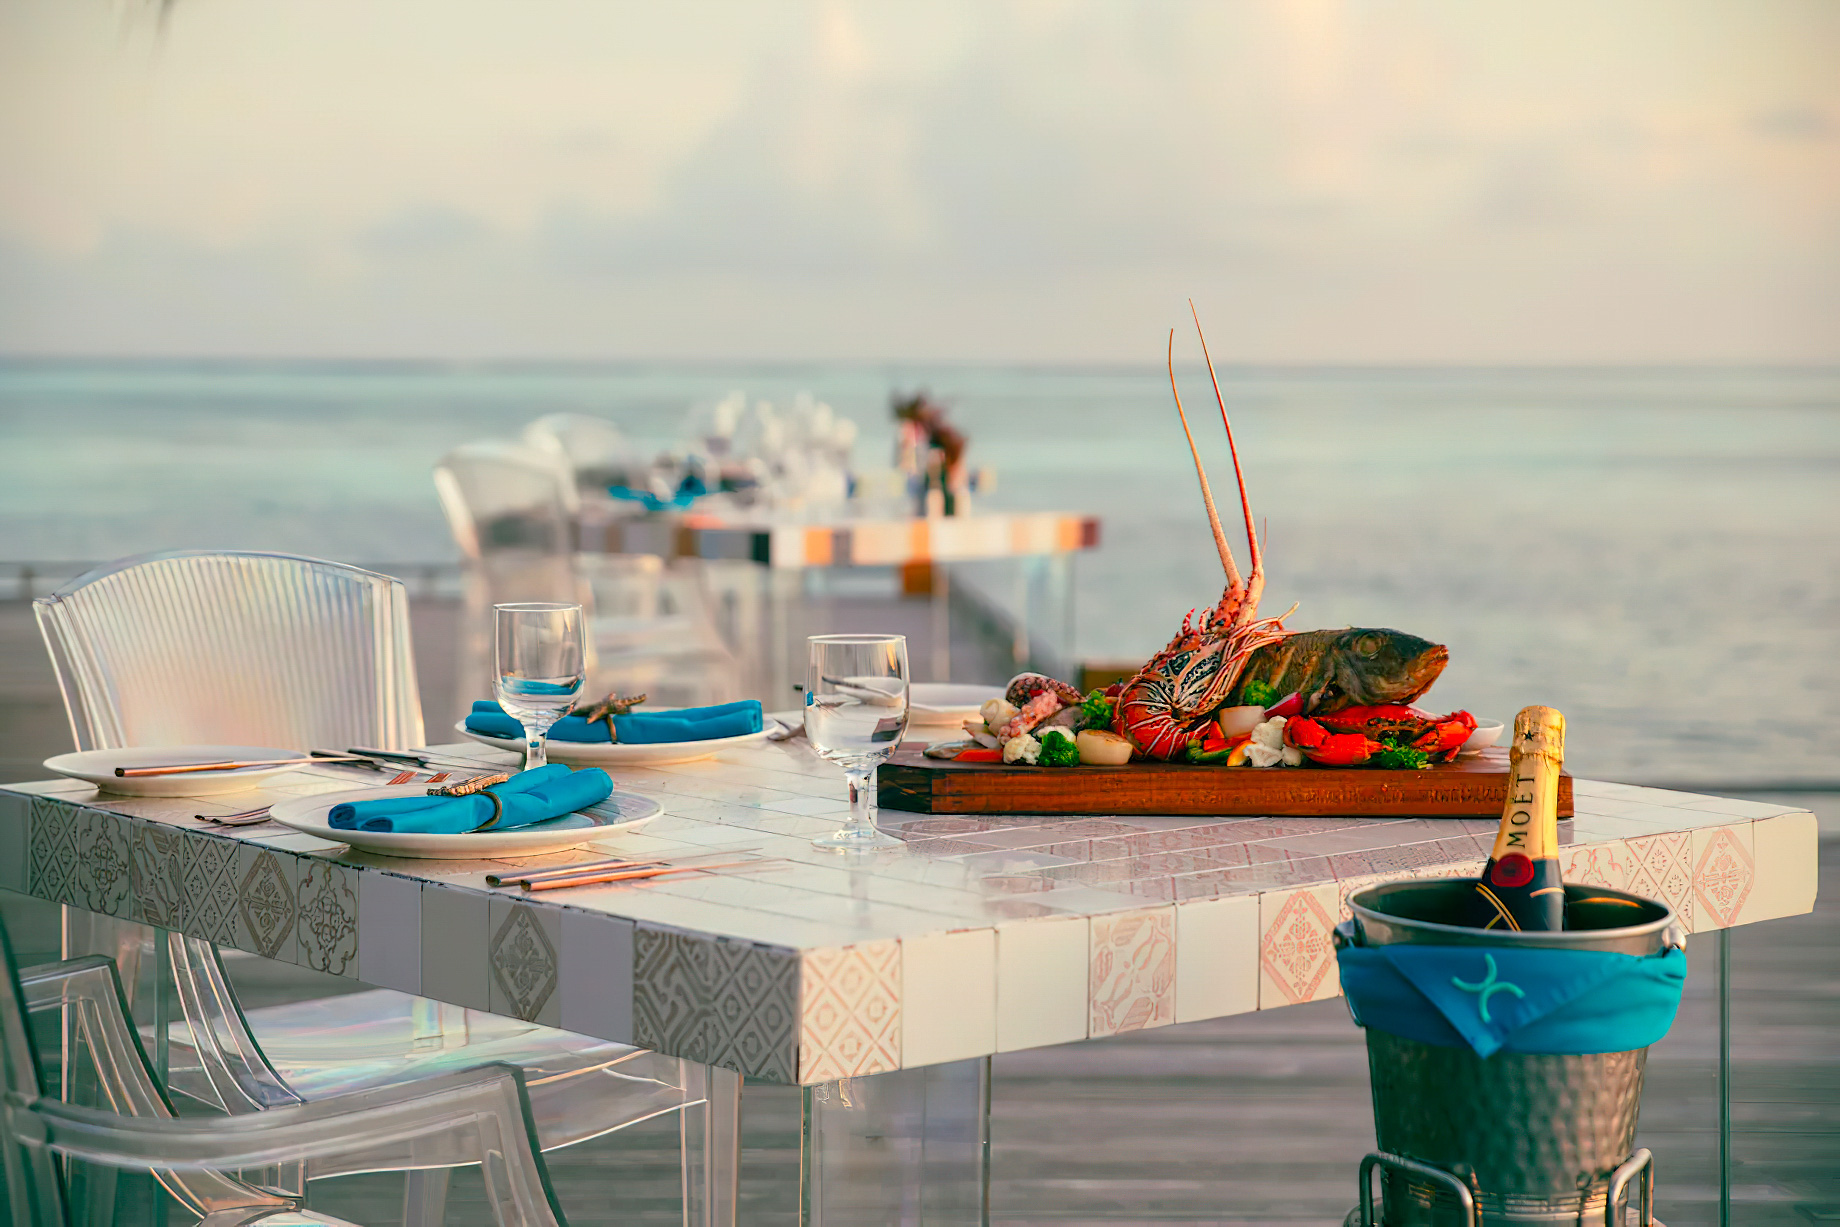 Cocoon Maldives Resort – Ookolhufinolhu, Lhaviyani Atoll, Maldives – Manta Overwater Restaurant Dining Tables